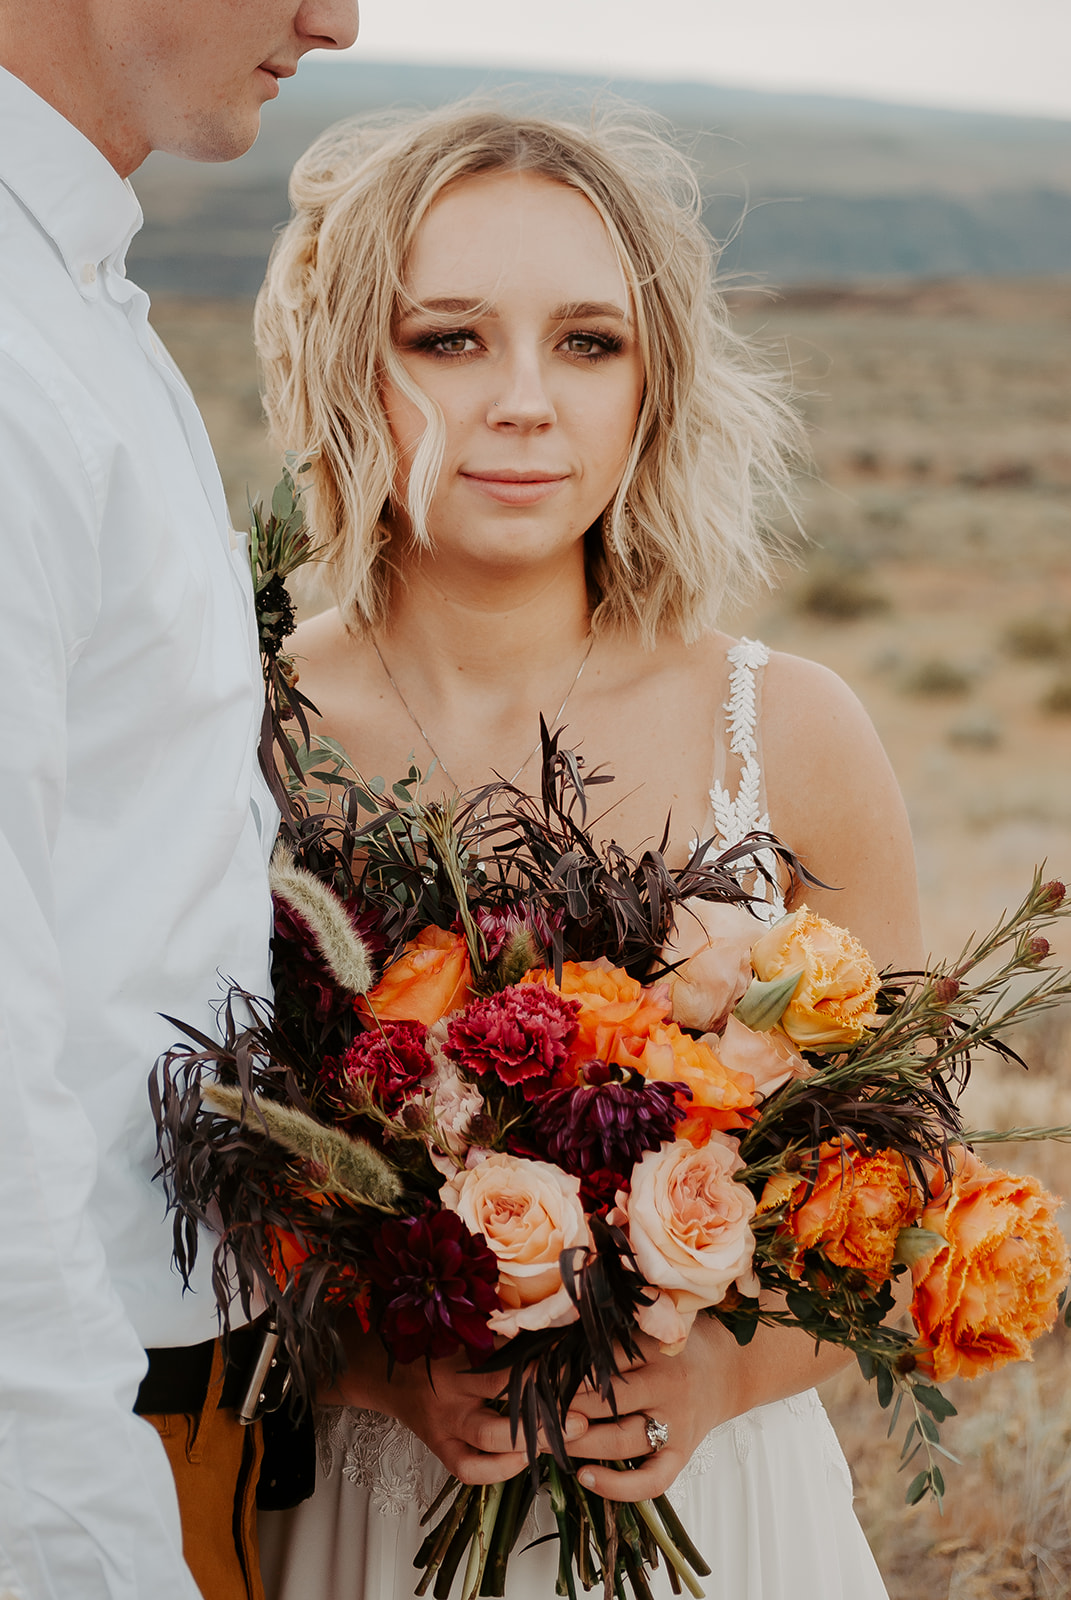 desert elopement wedding spokane washington bridal dress